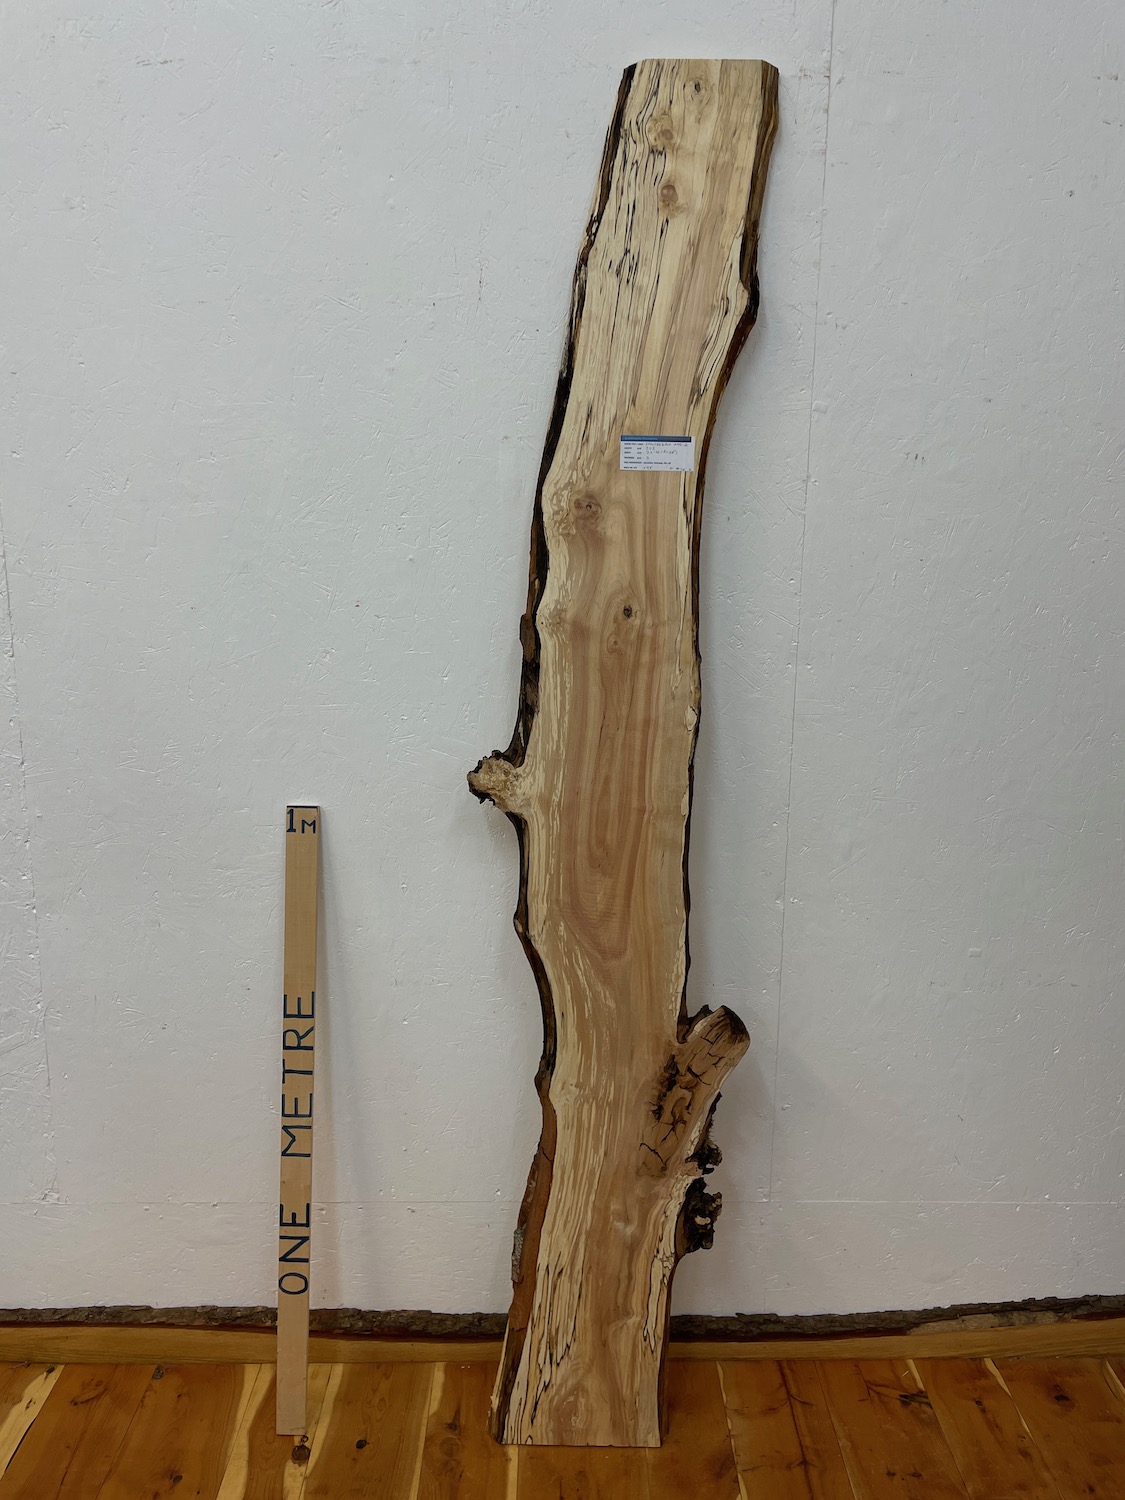 SPALTED BIRCH Natural Waney Edge Slab Planed Finish Hardwood Board 1645-2 Thickness 3cm Kiln Dried Seasoned Live Edge Wildwood